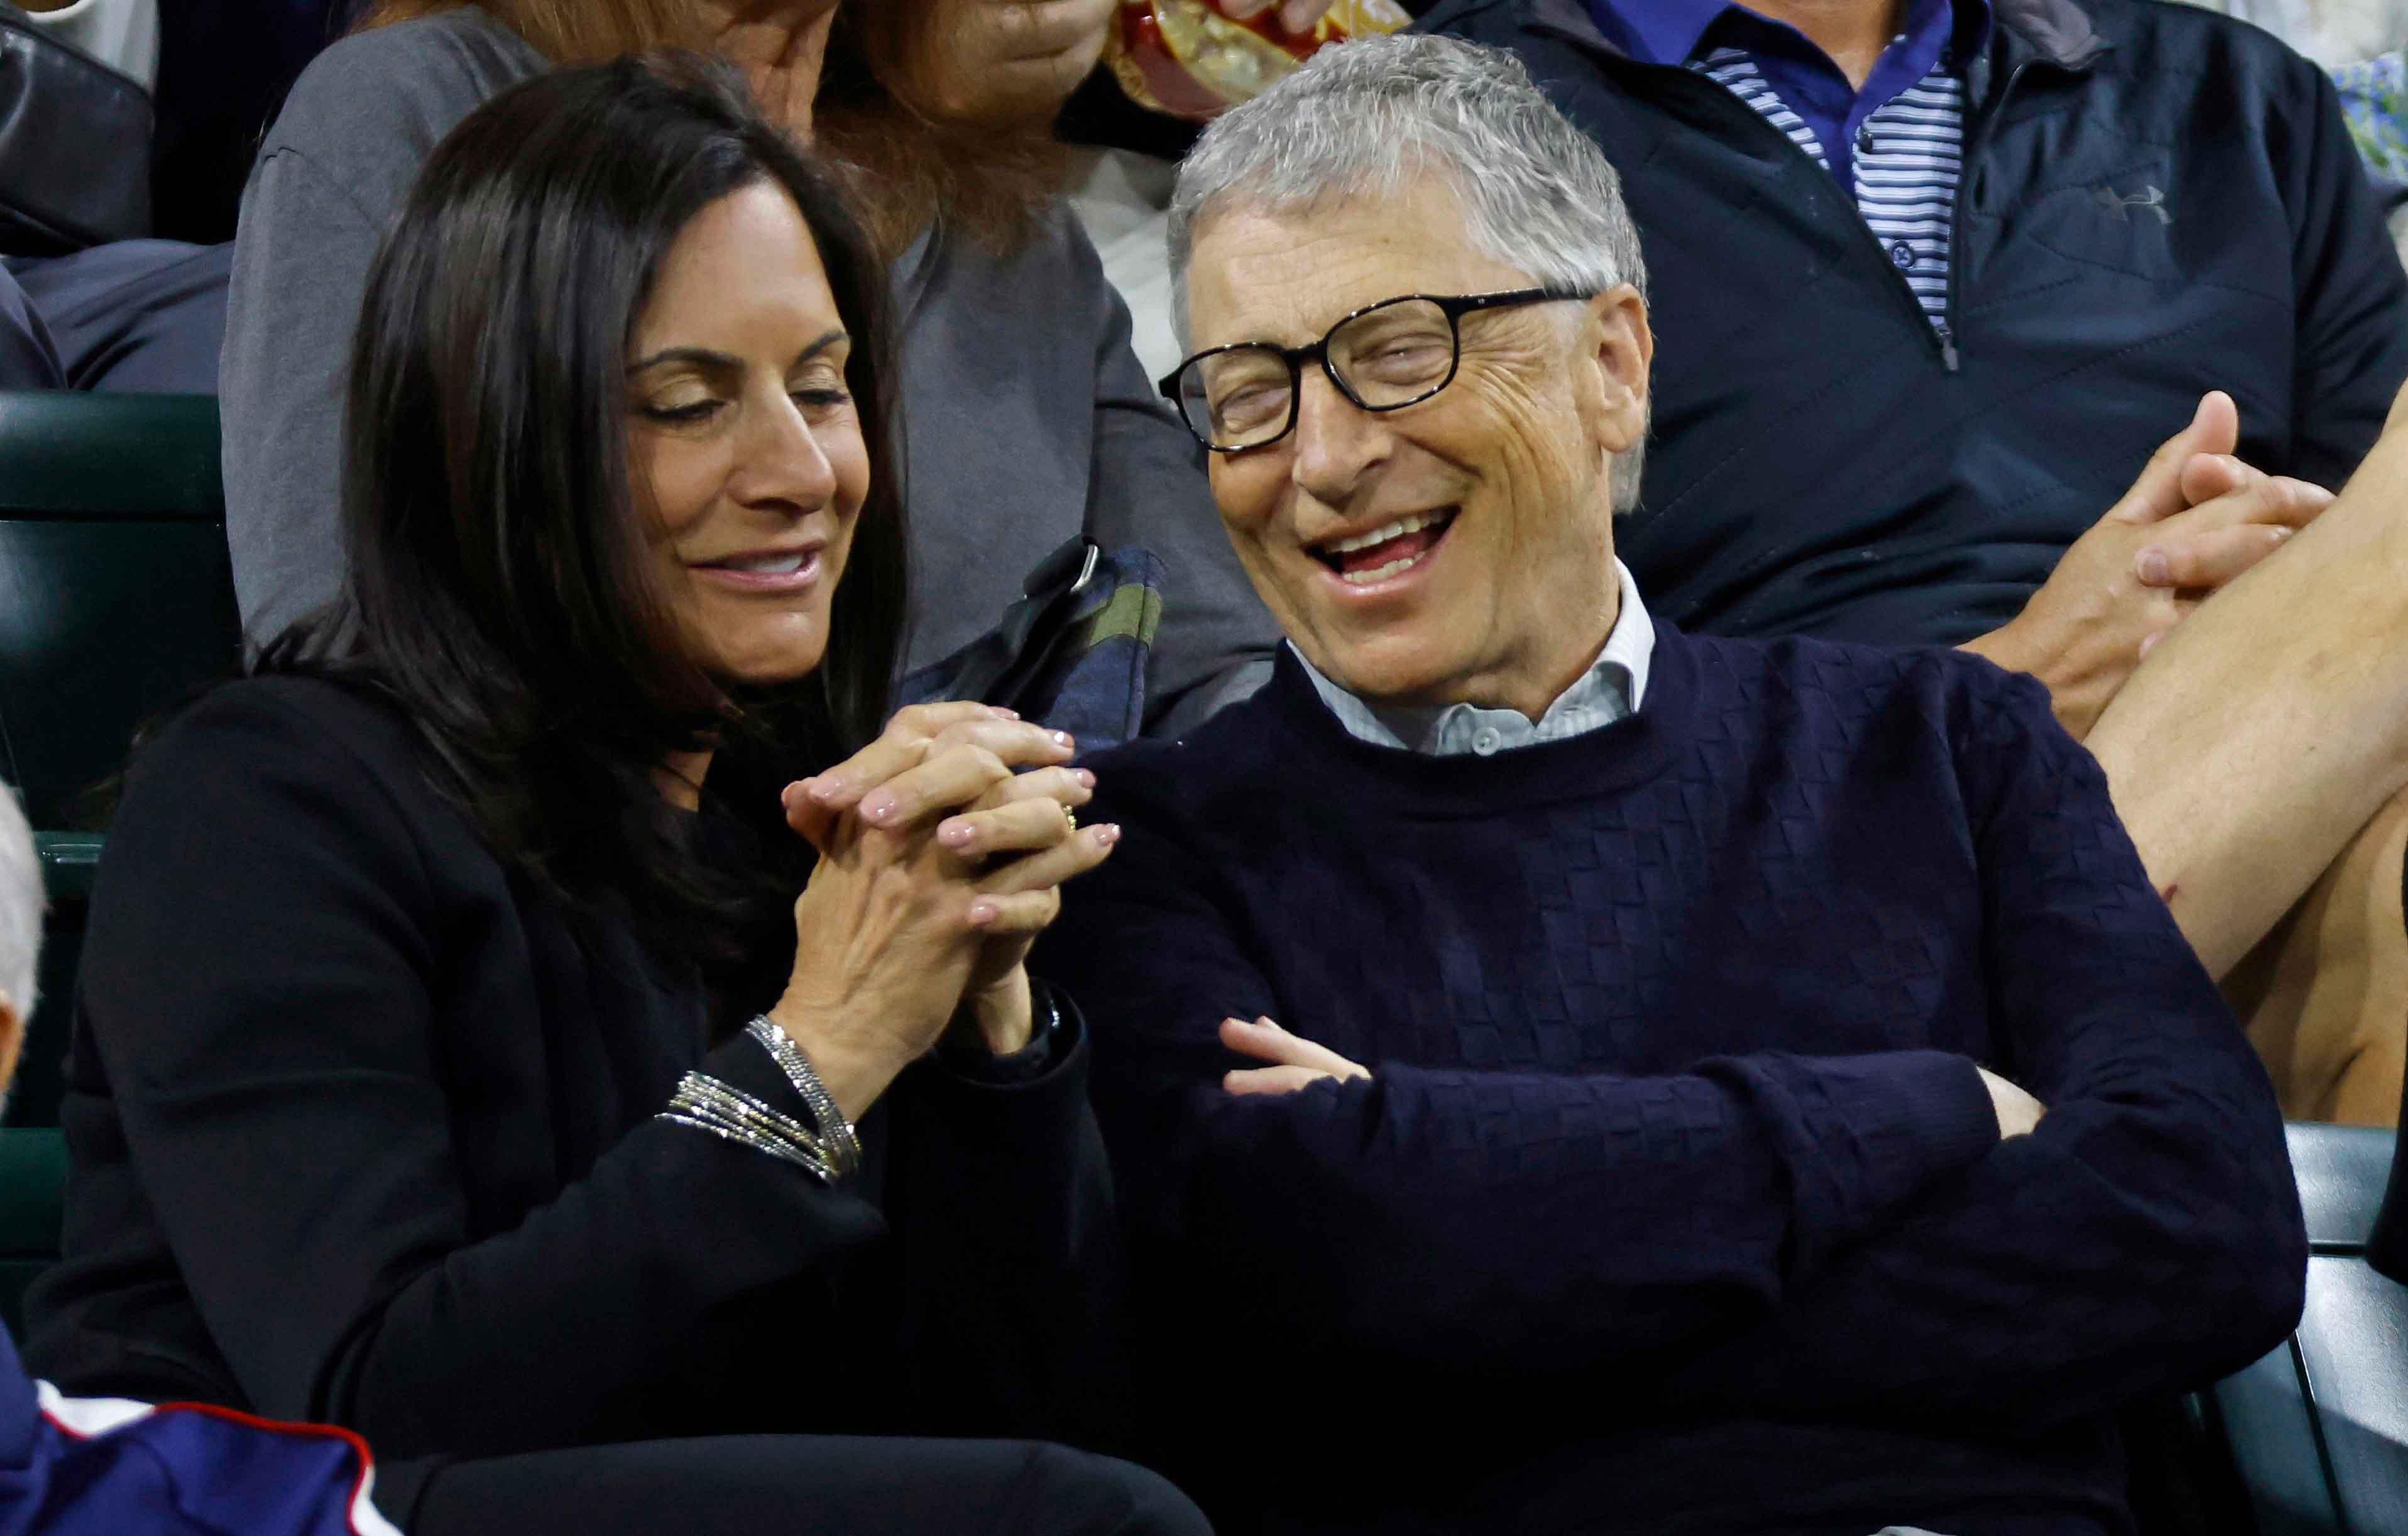 Bill Gates New Girlfriend Revealed!